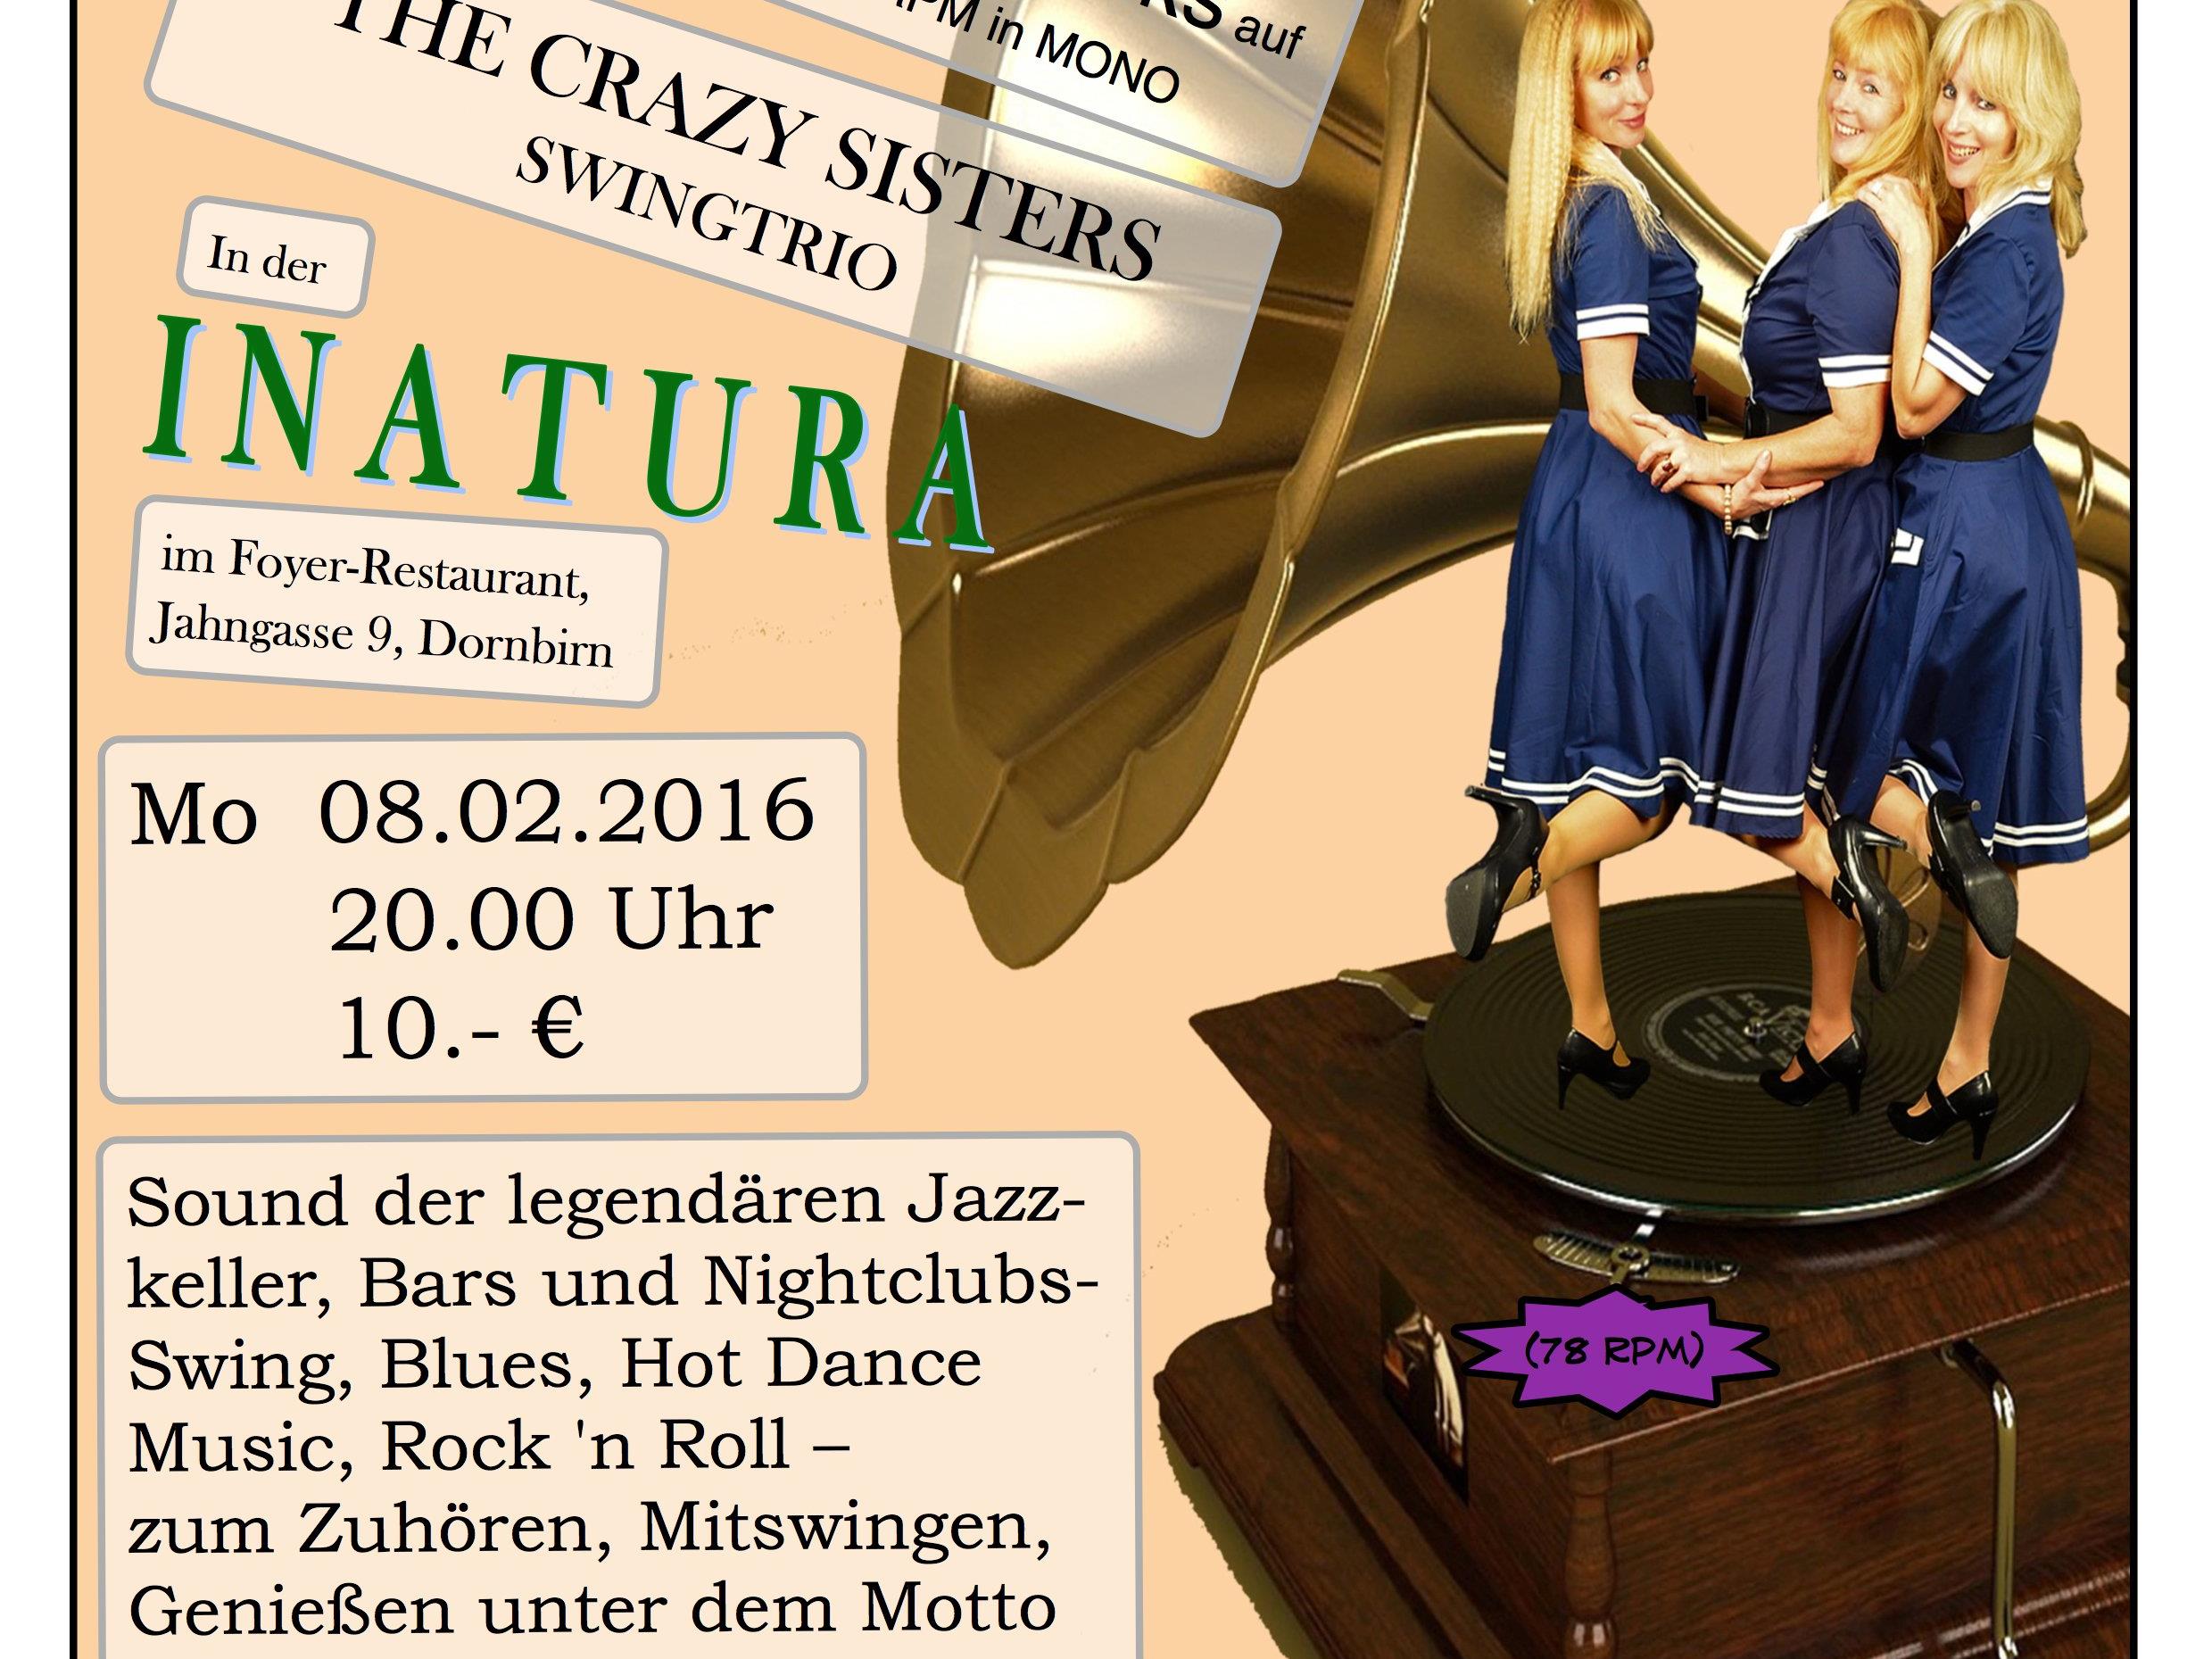 Schellacks am Rosenmontag und The Crazy Sisters